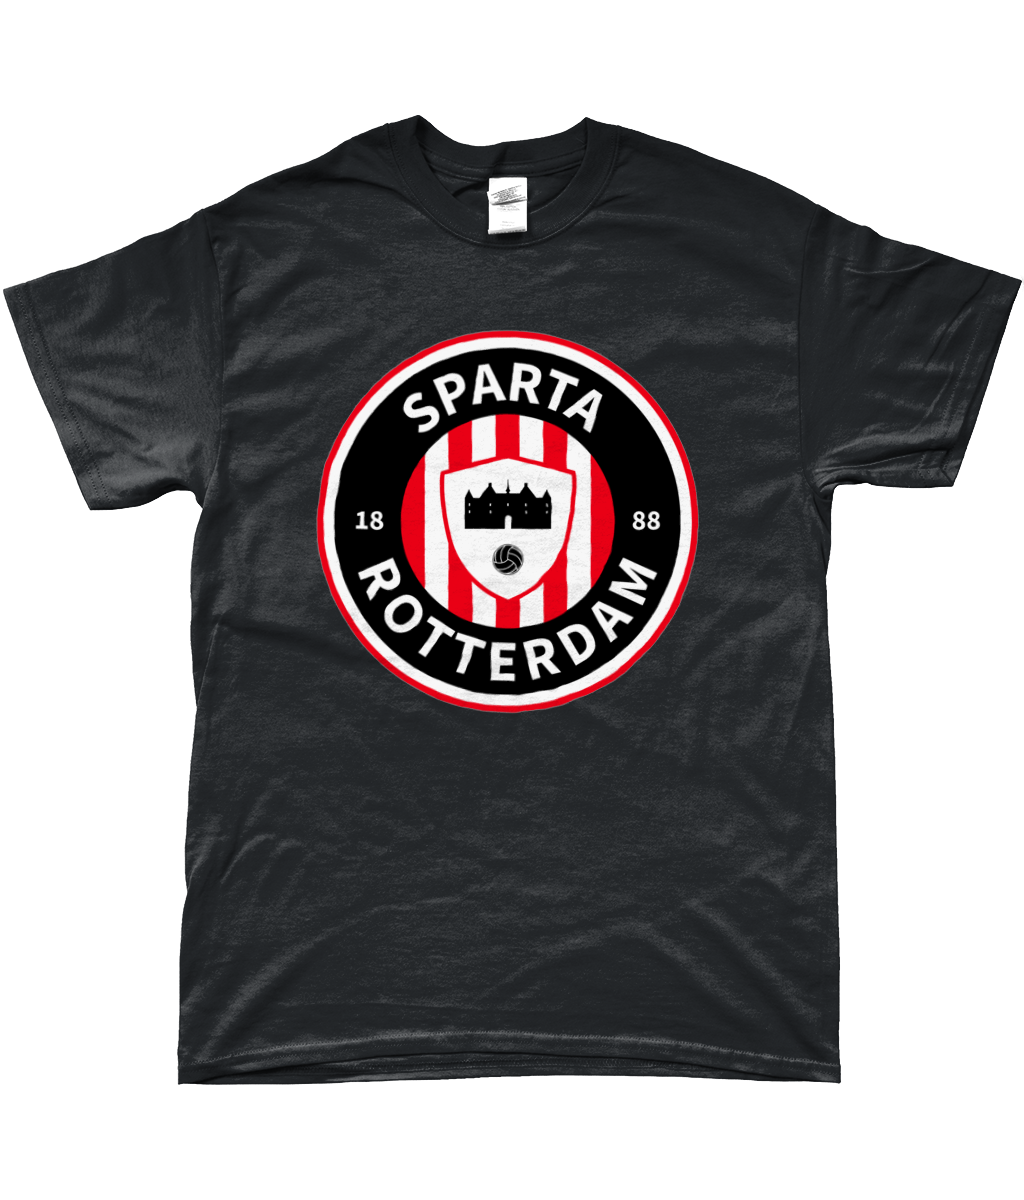 Sparta Rotterdam - Kasteelheren T-shirt